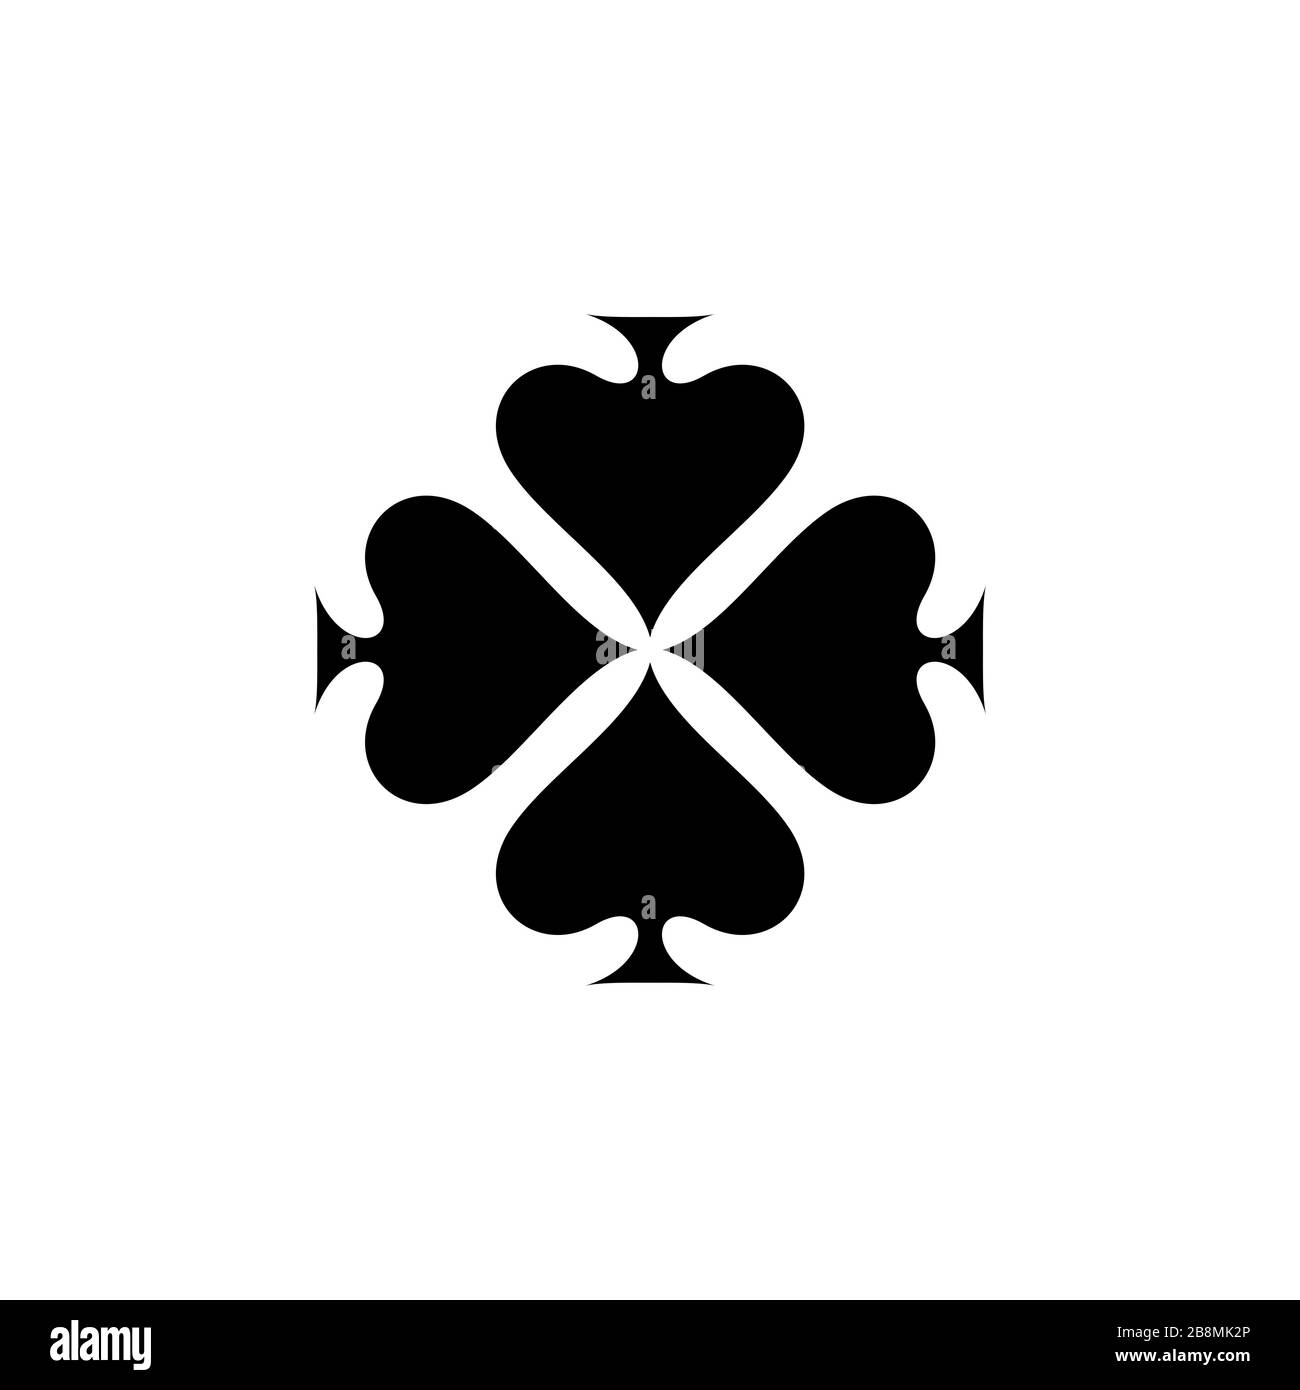 spades card symbol